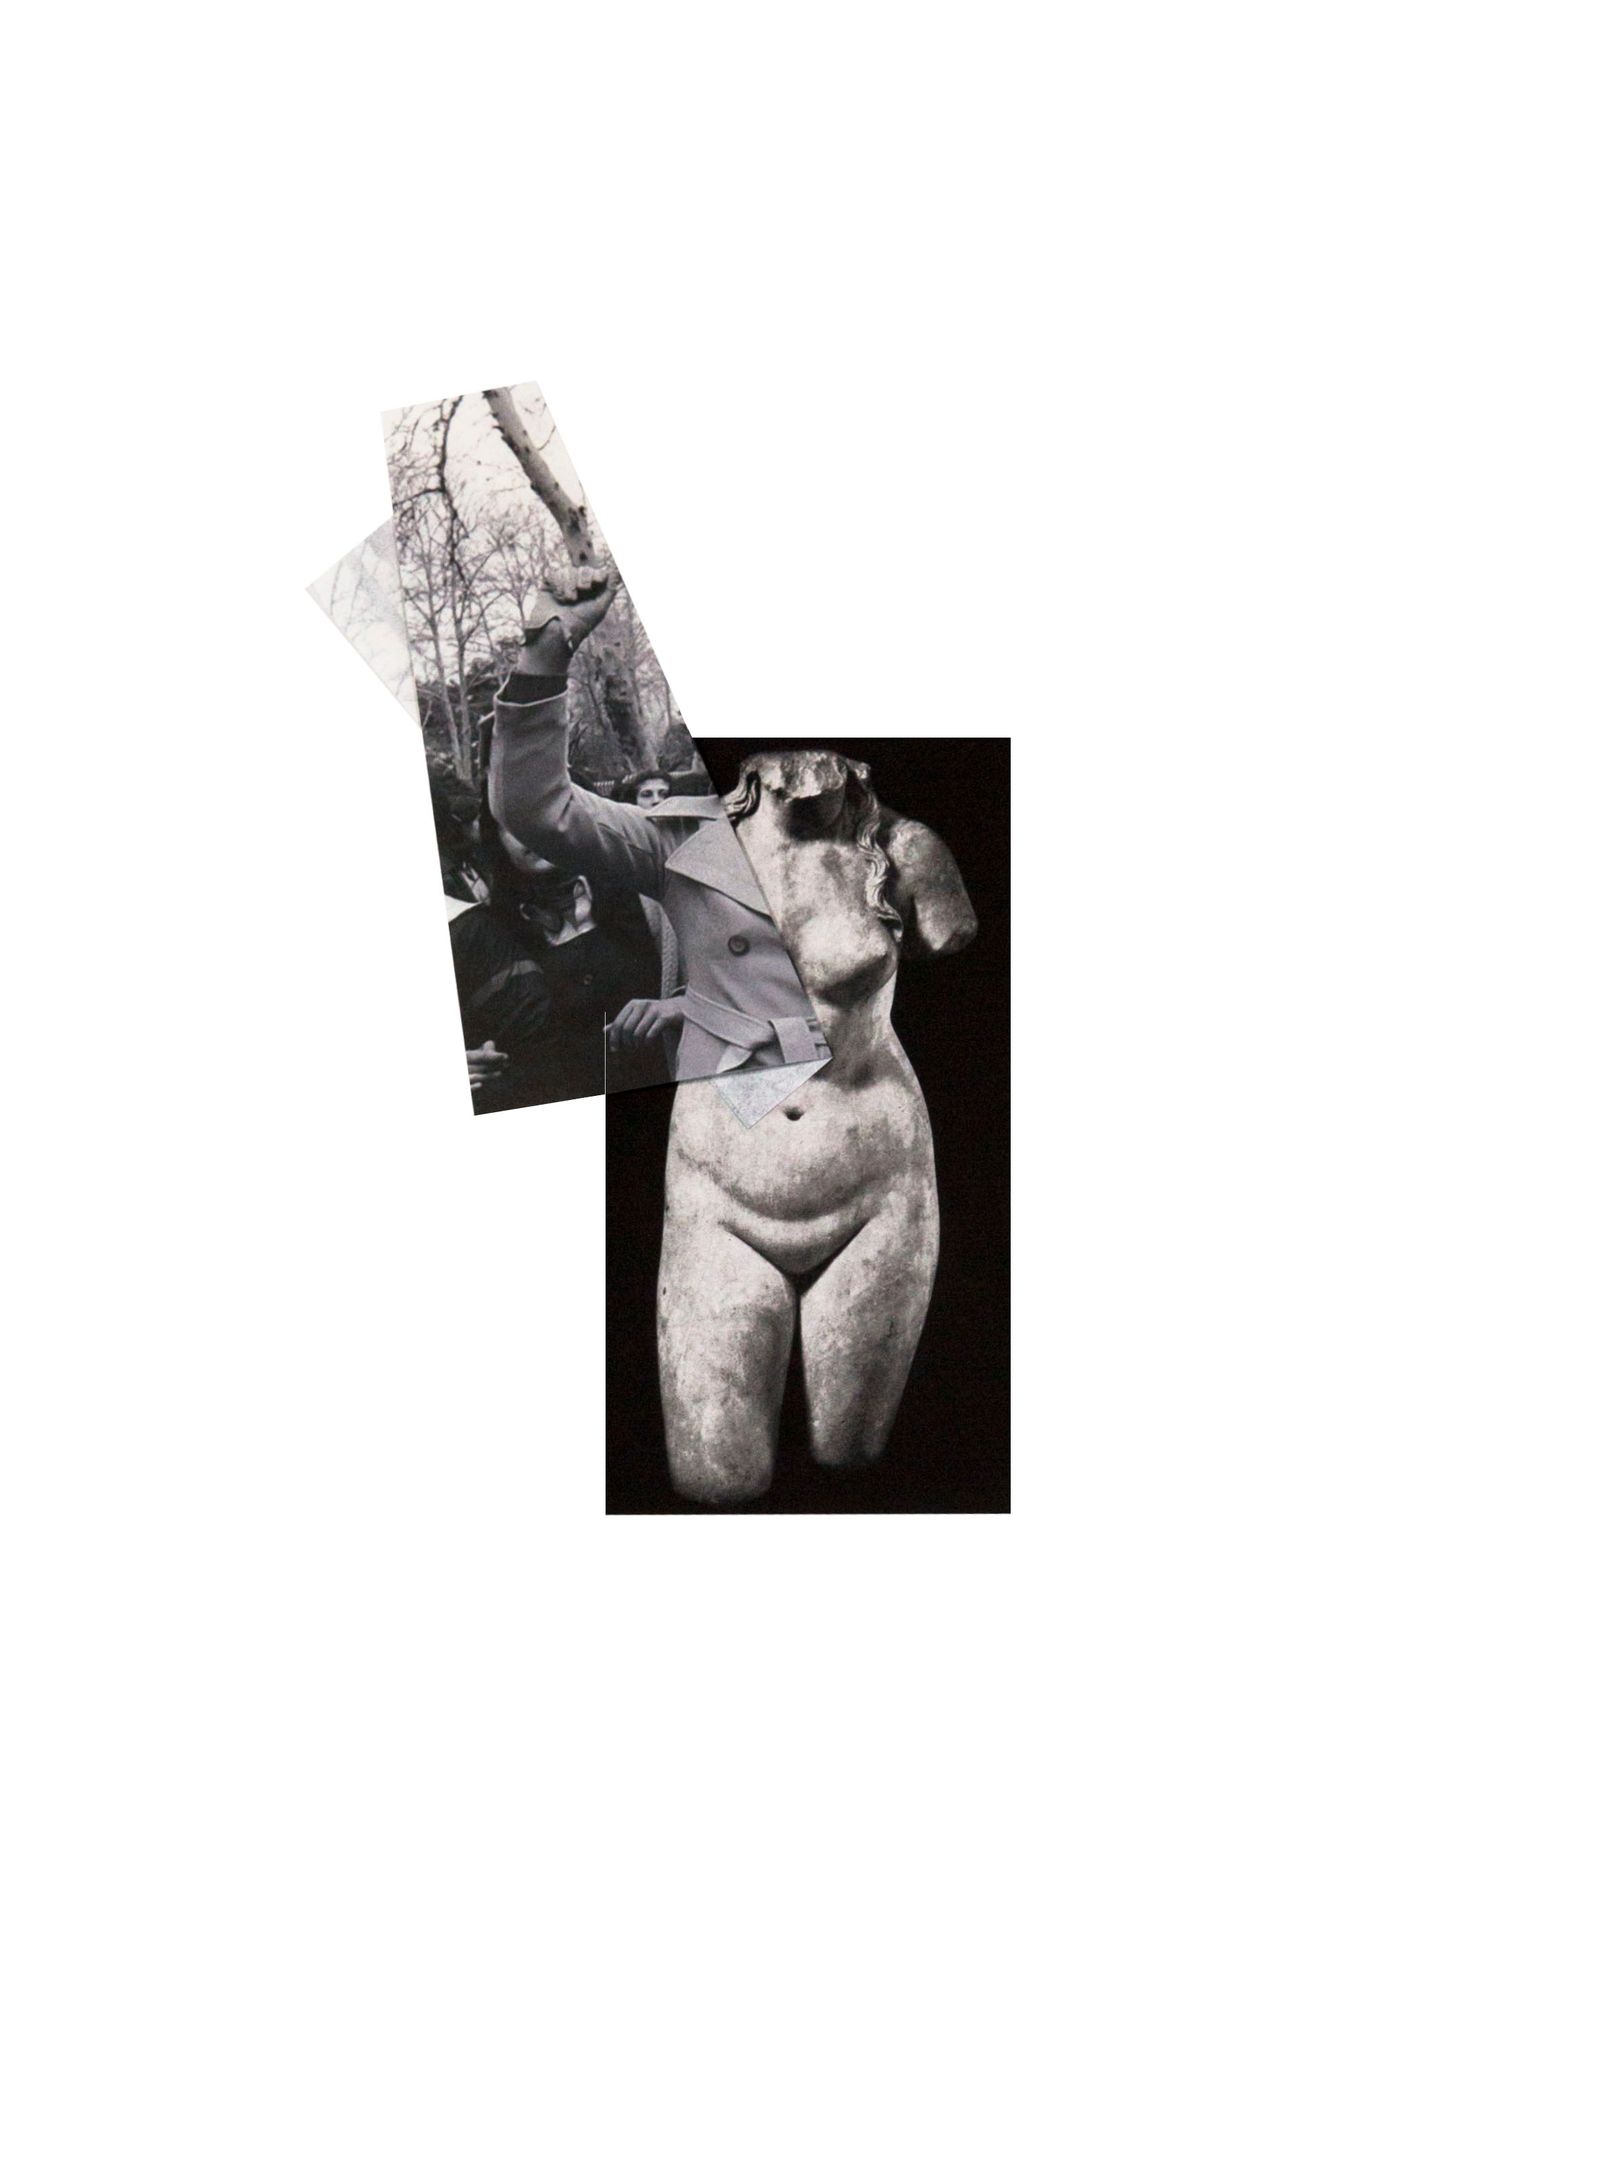 © Ira Lombardia - Impudens Venus IX Collage Photographic print on kozo and bamboo paper, 76 x 61 cm 2020